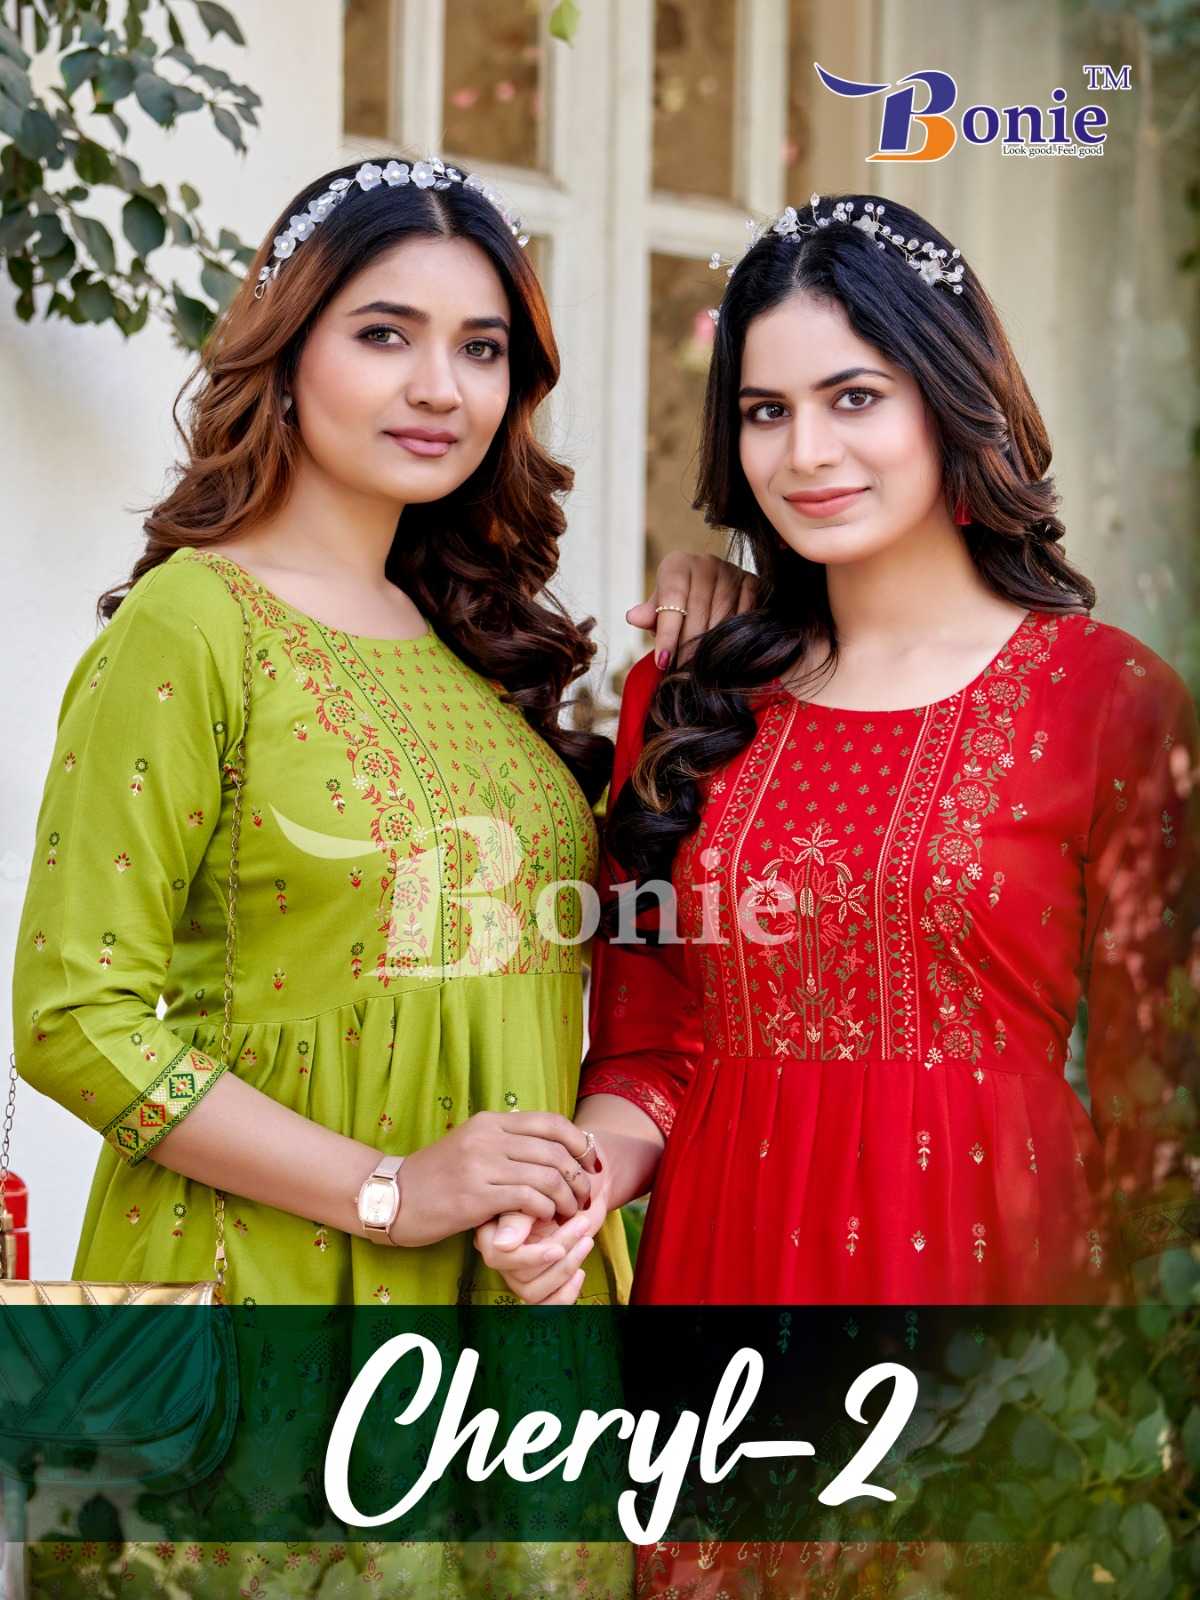 bonie cheryl vol 2 beautiful printed readymade girls tunic